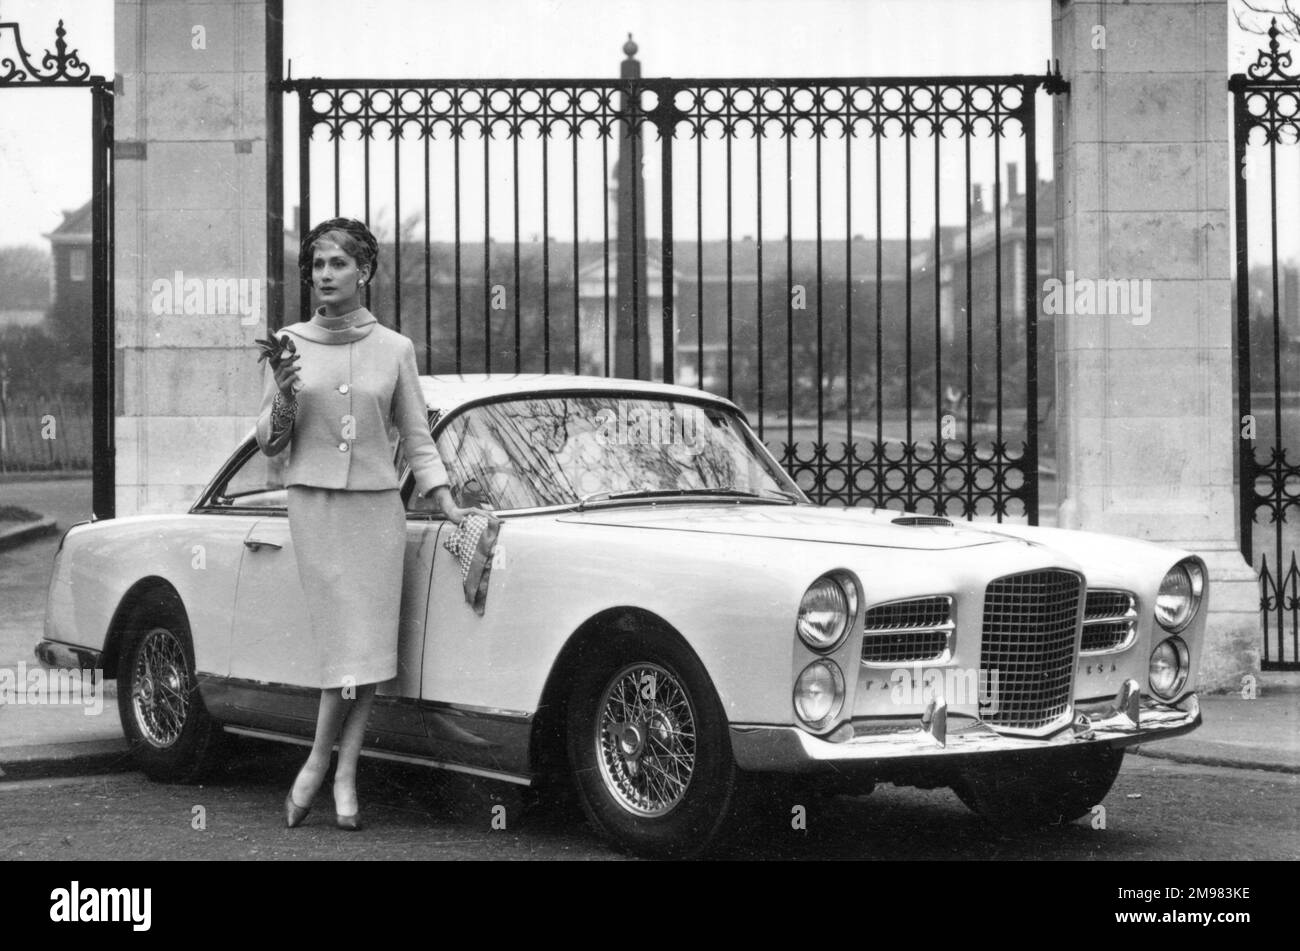 Advertisement for Facel Vega car with female model (Helen Connor). Stock Photo